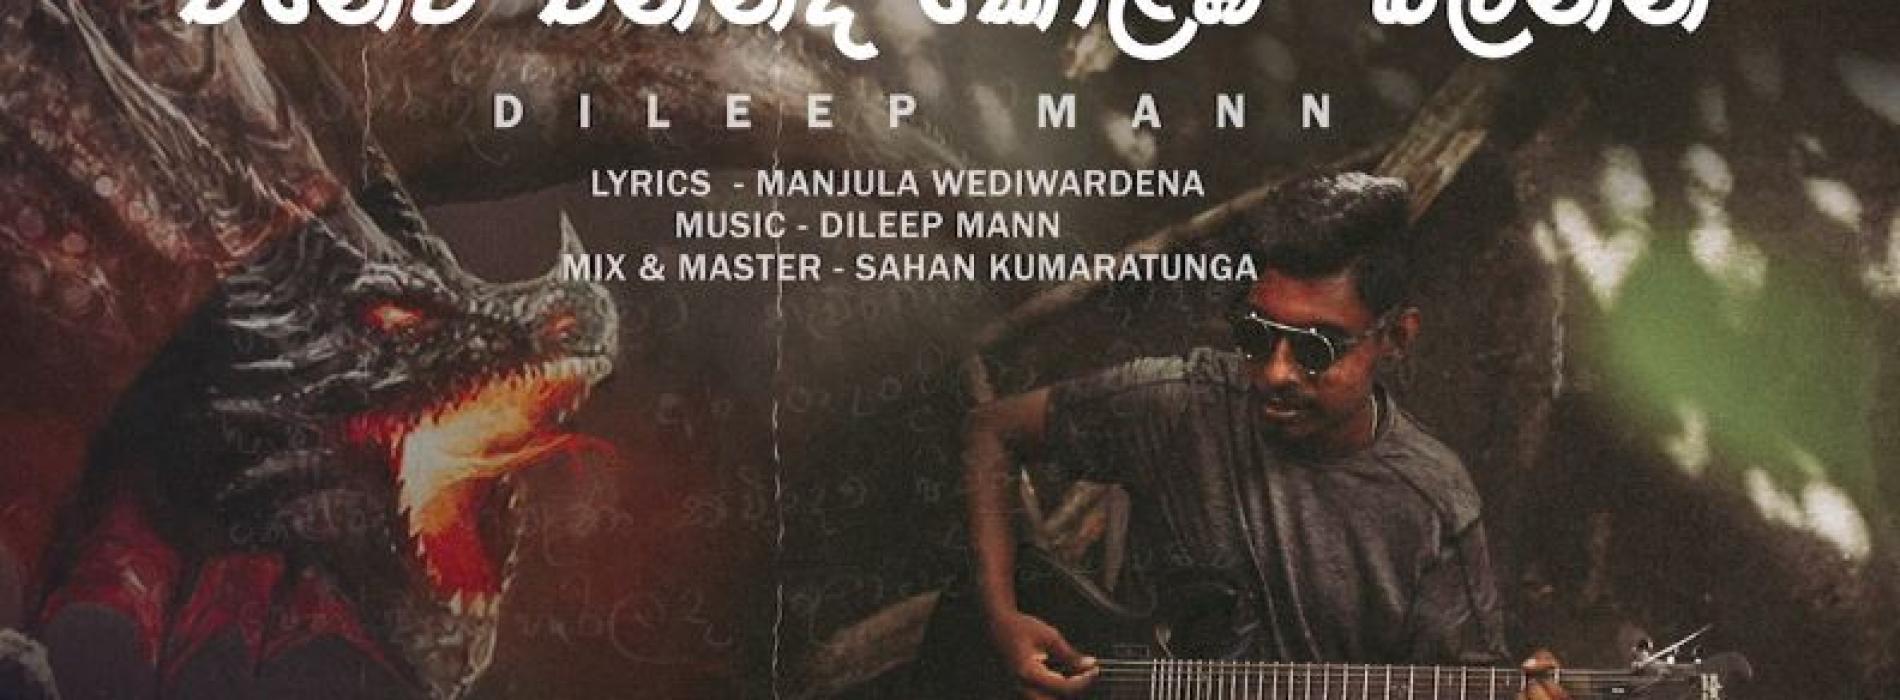 New Music : Dileep Mann – Chineta Ennada Colomba Balanna | චීනෙට එන්නද කොළඹ බලන්න